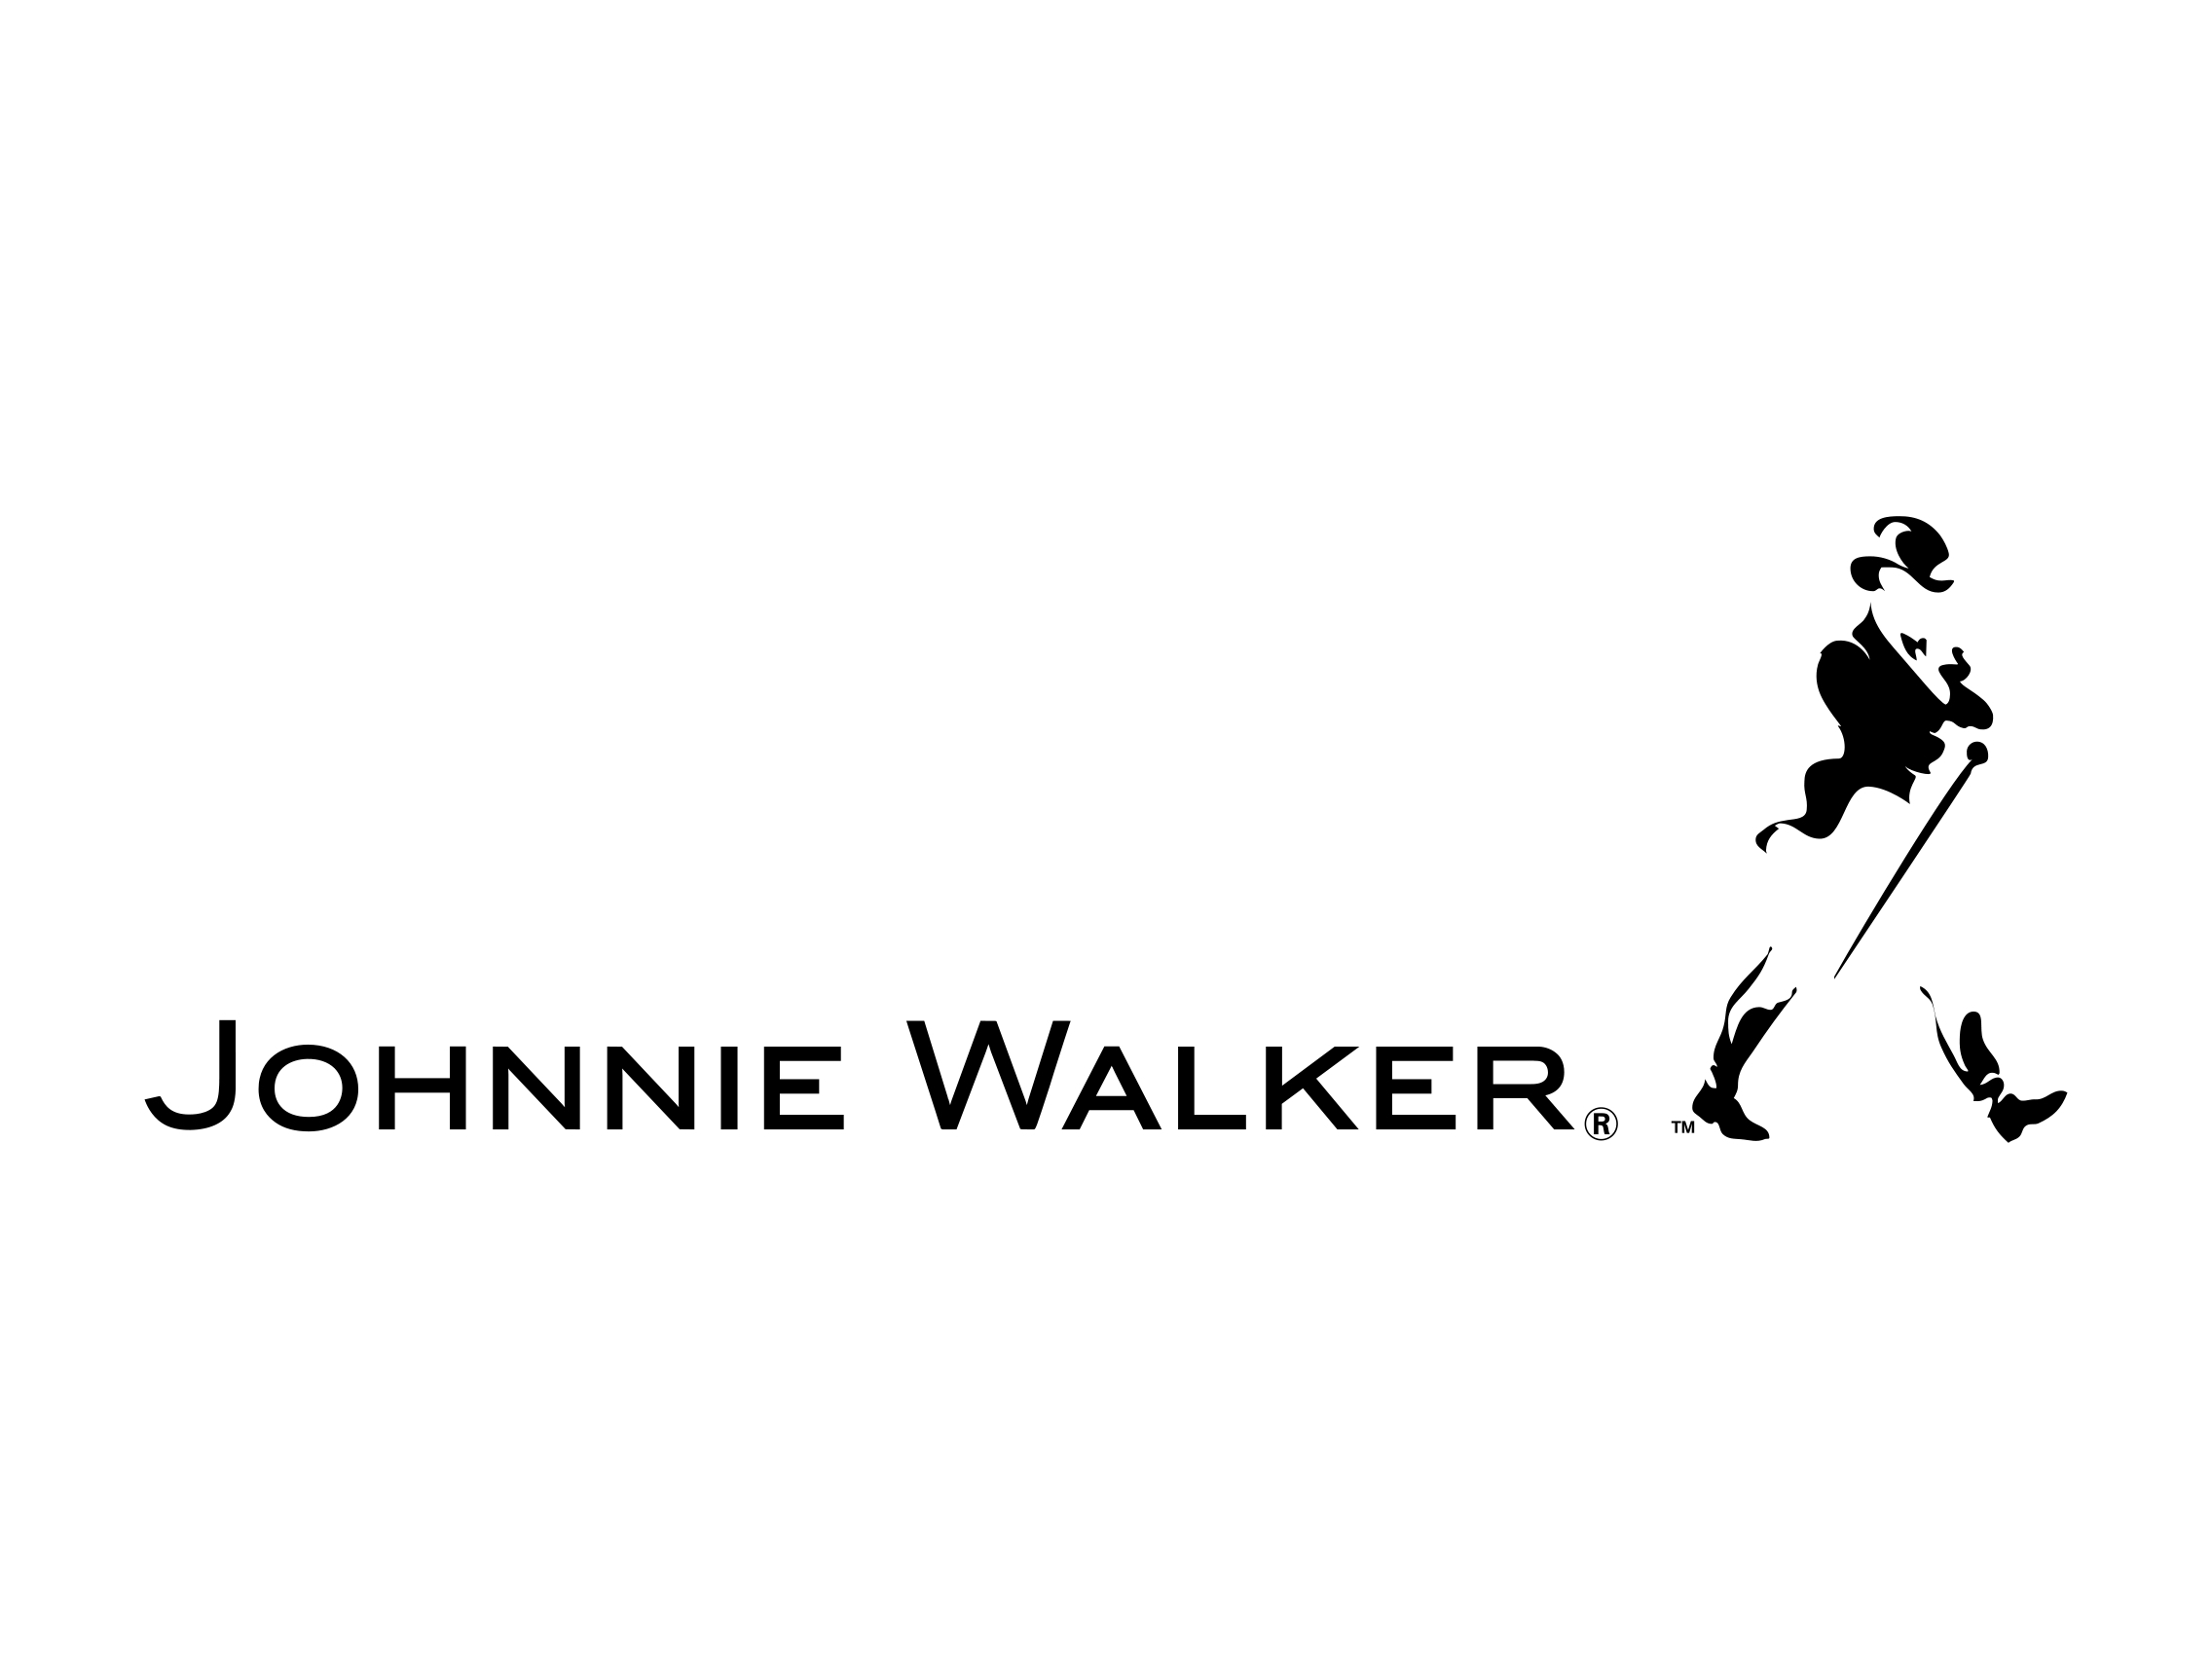 Johnnie Walker Puter Wallpaper